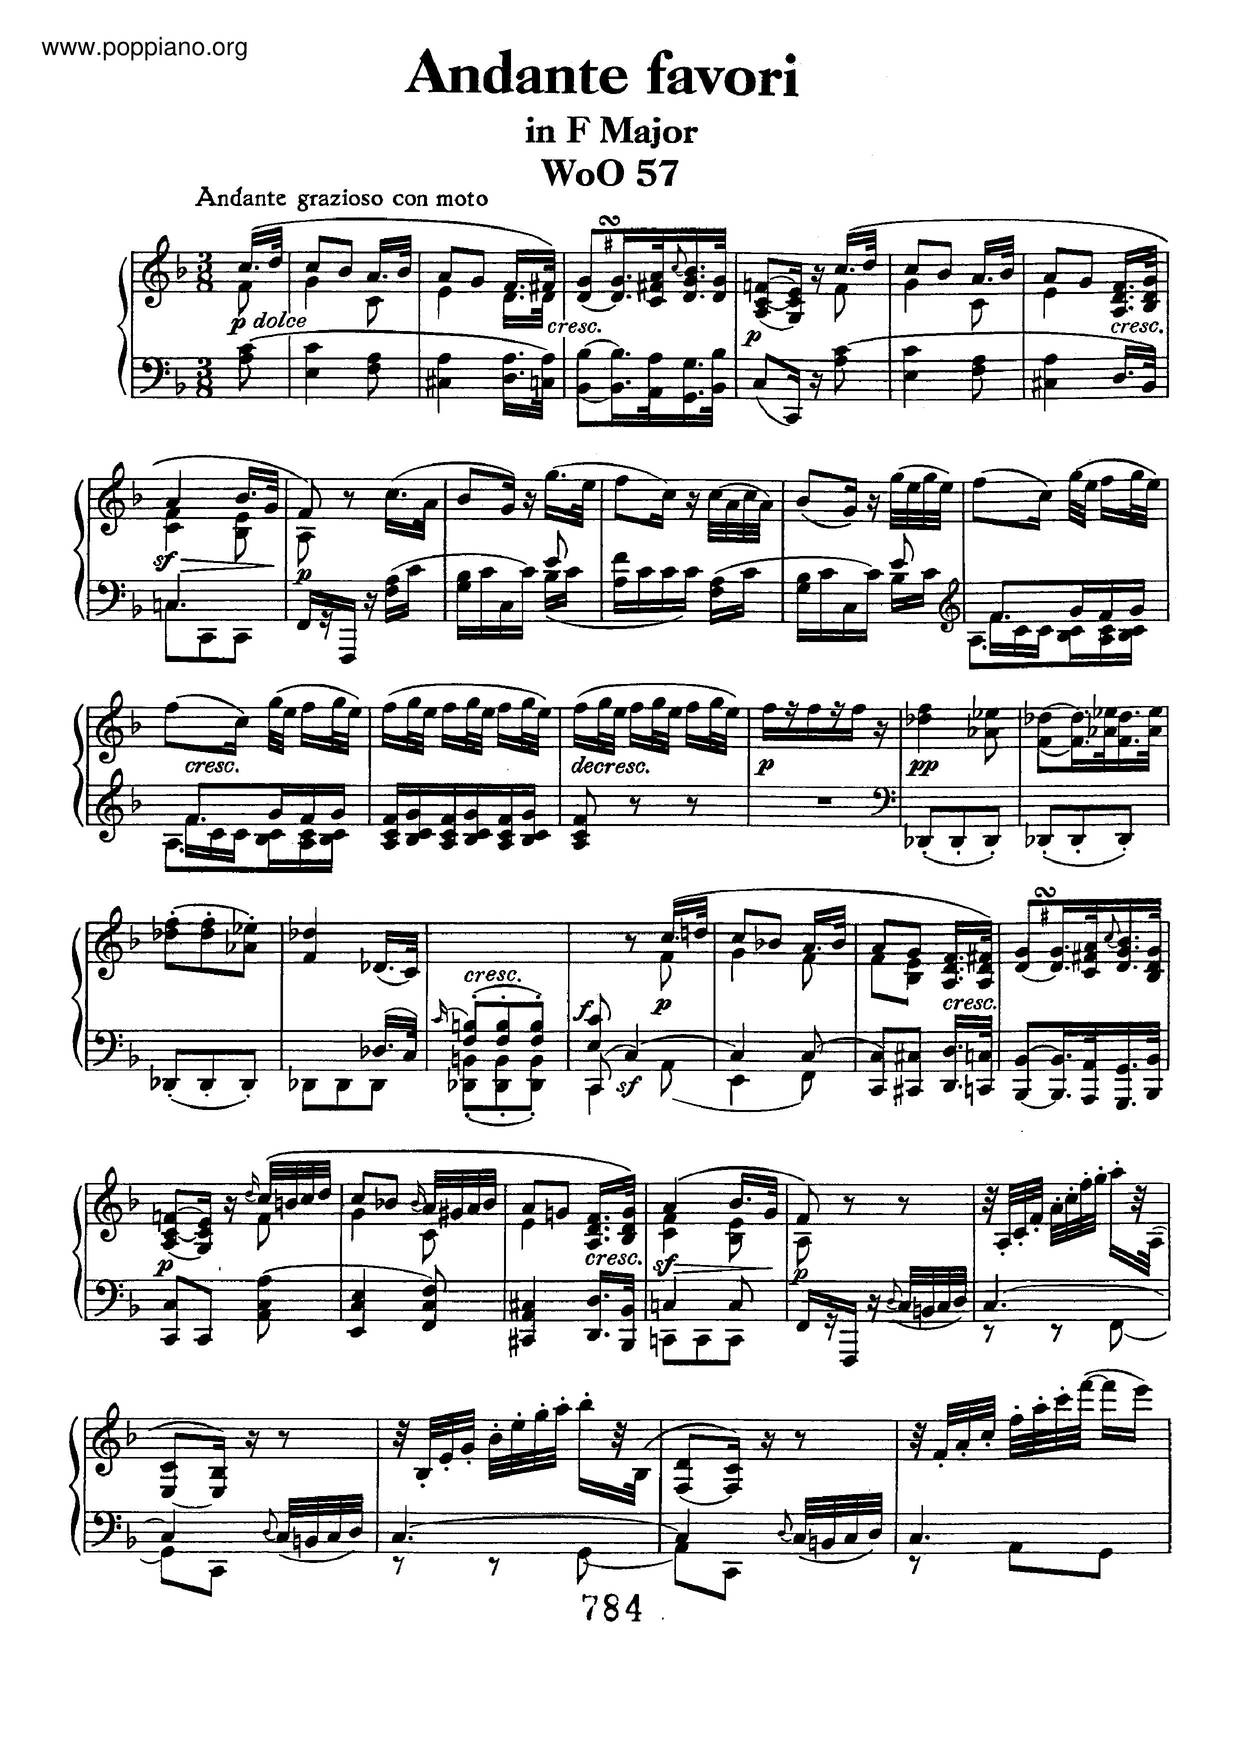 Andante Favori, WoO 57 Score